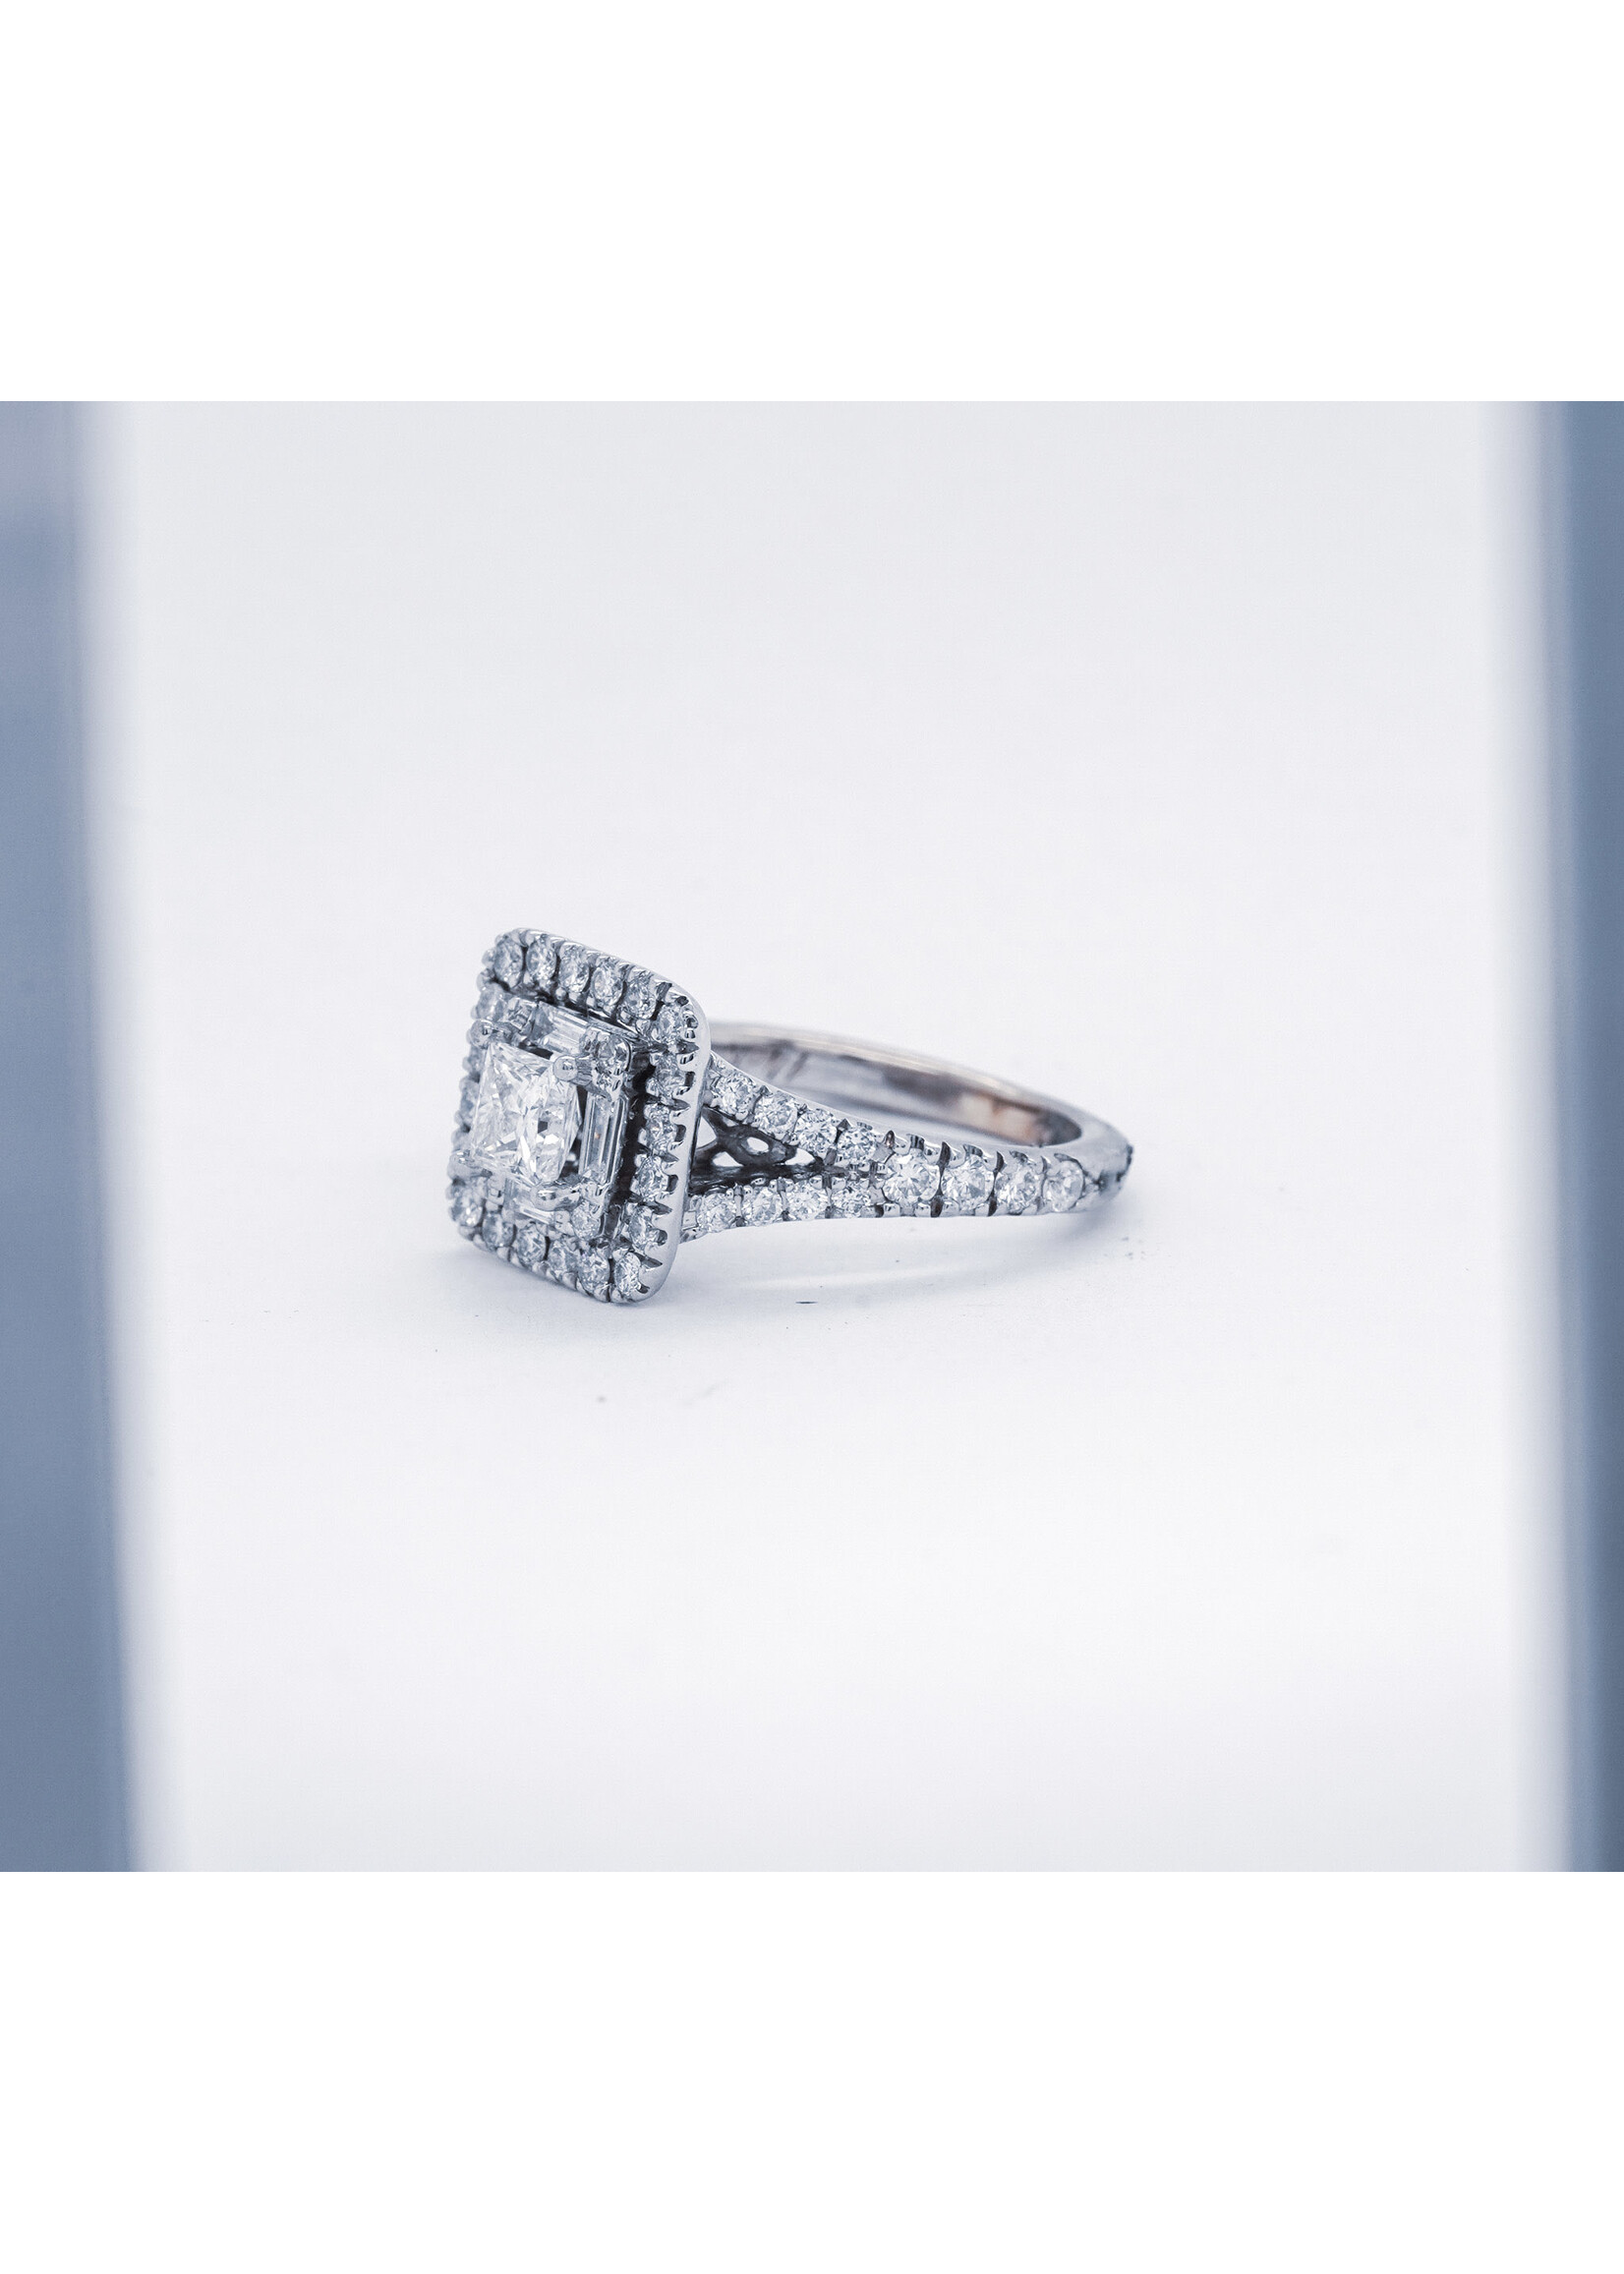 14KW 4.7g 1.50ctw (.50ctr) H/SI2 Princess Cut Diamond Halo Neil Lane Engagement Ring (size 5)